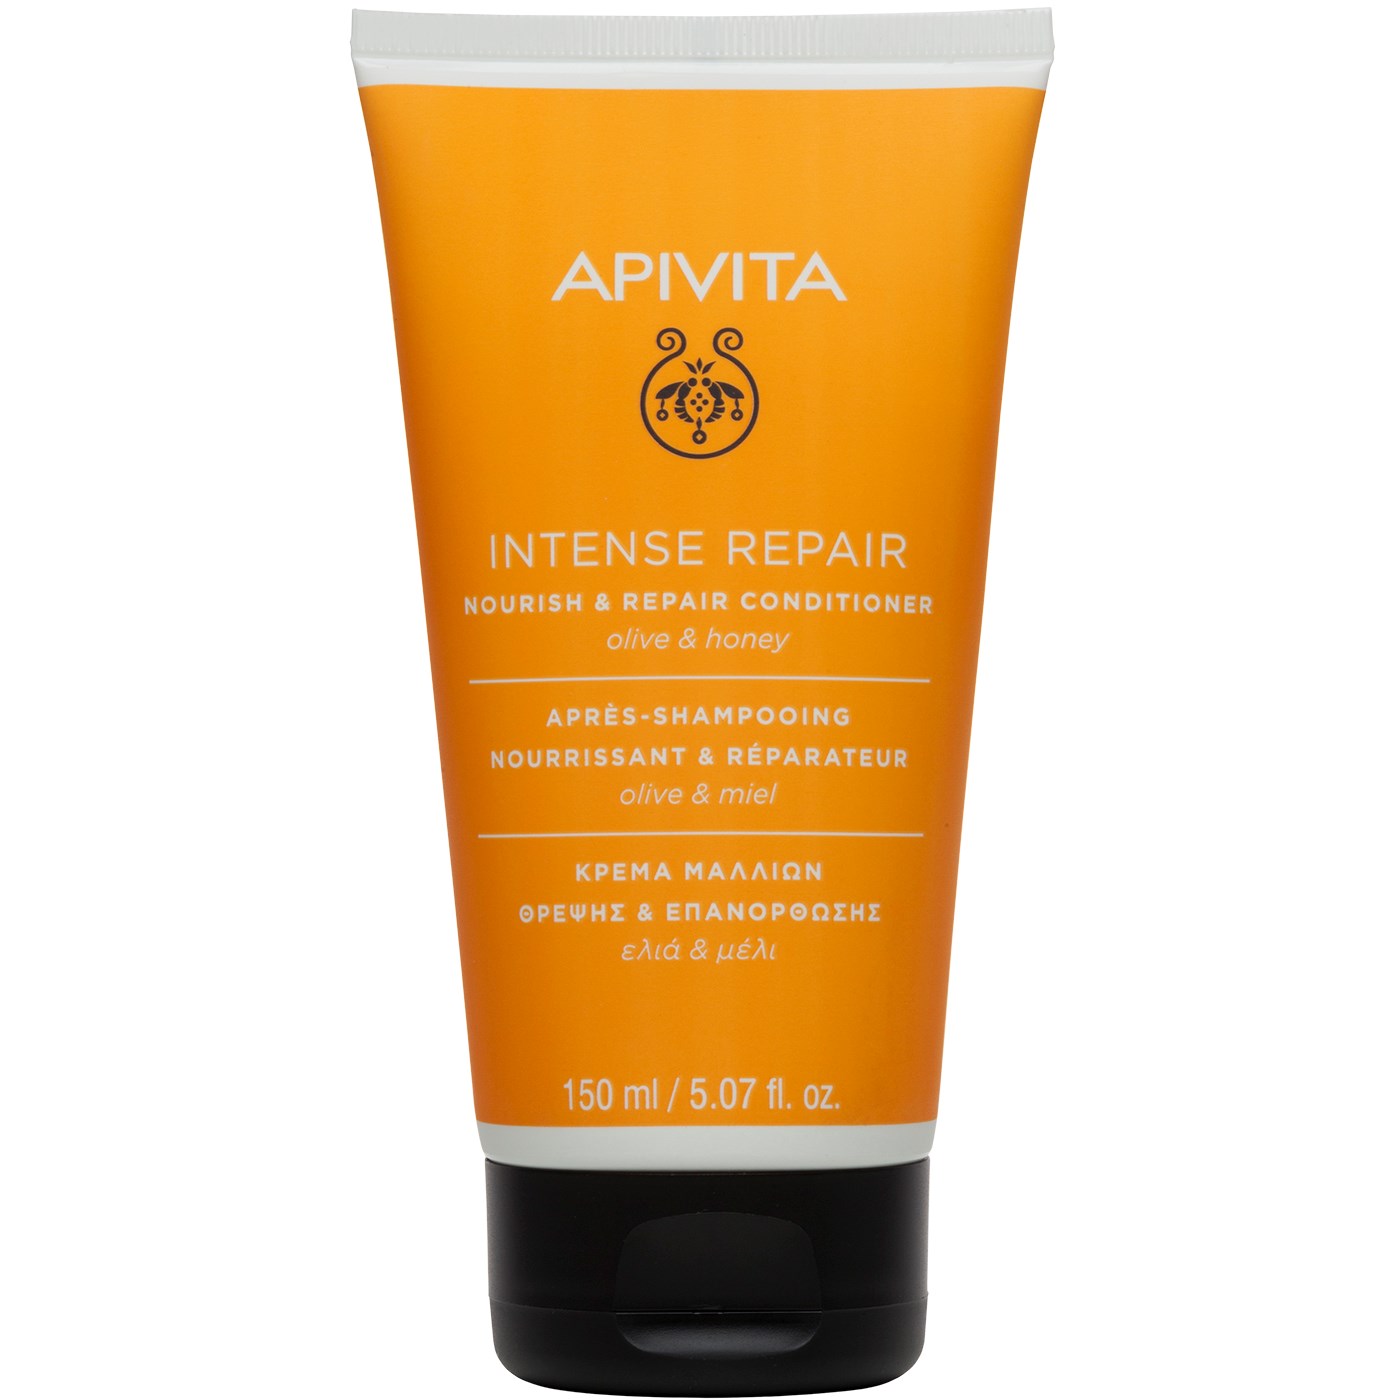 APIVITA Nourish & Repair Conditioner for Dry-Damaged Hair Intense Repa